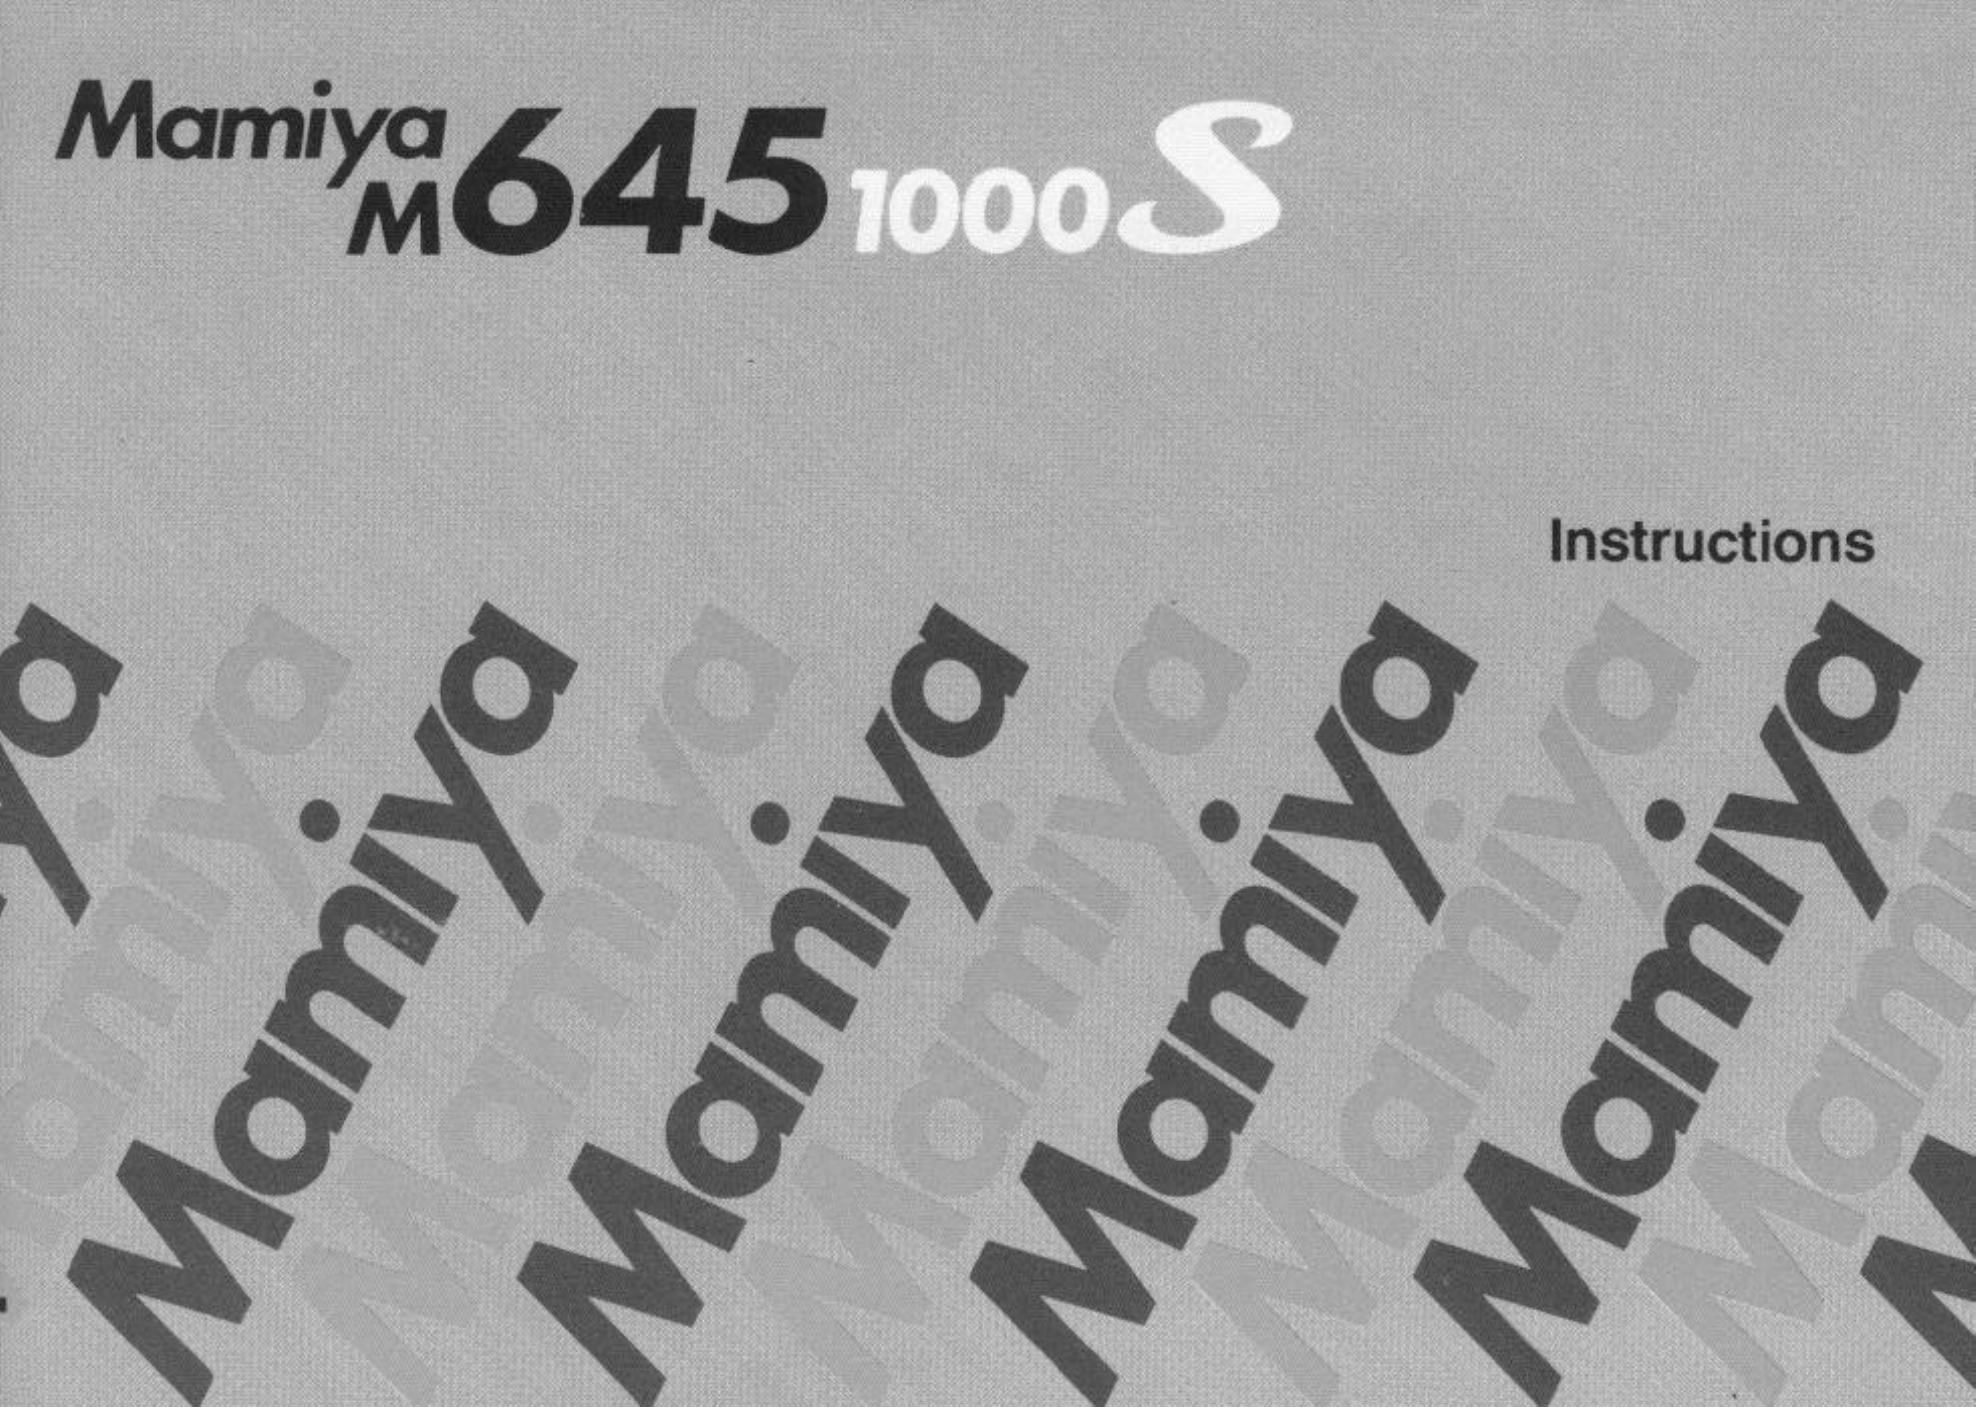 Mamiya M645 1000S Digital Camera User Manual